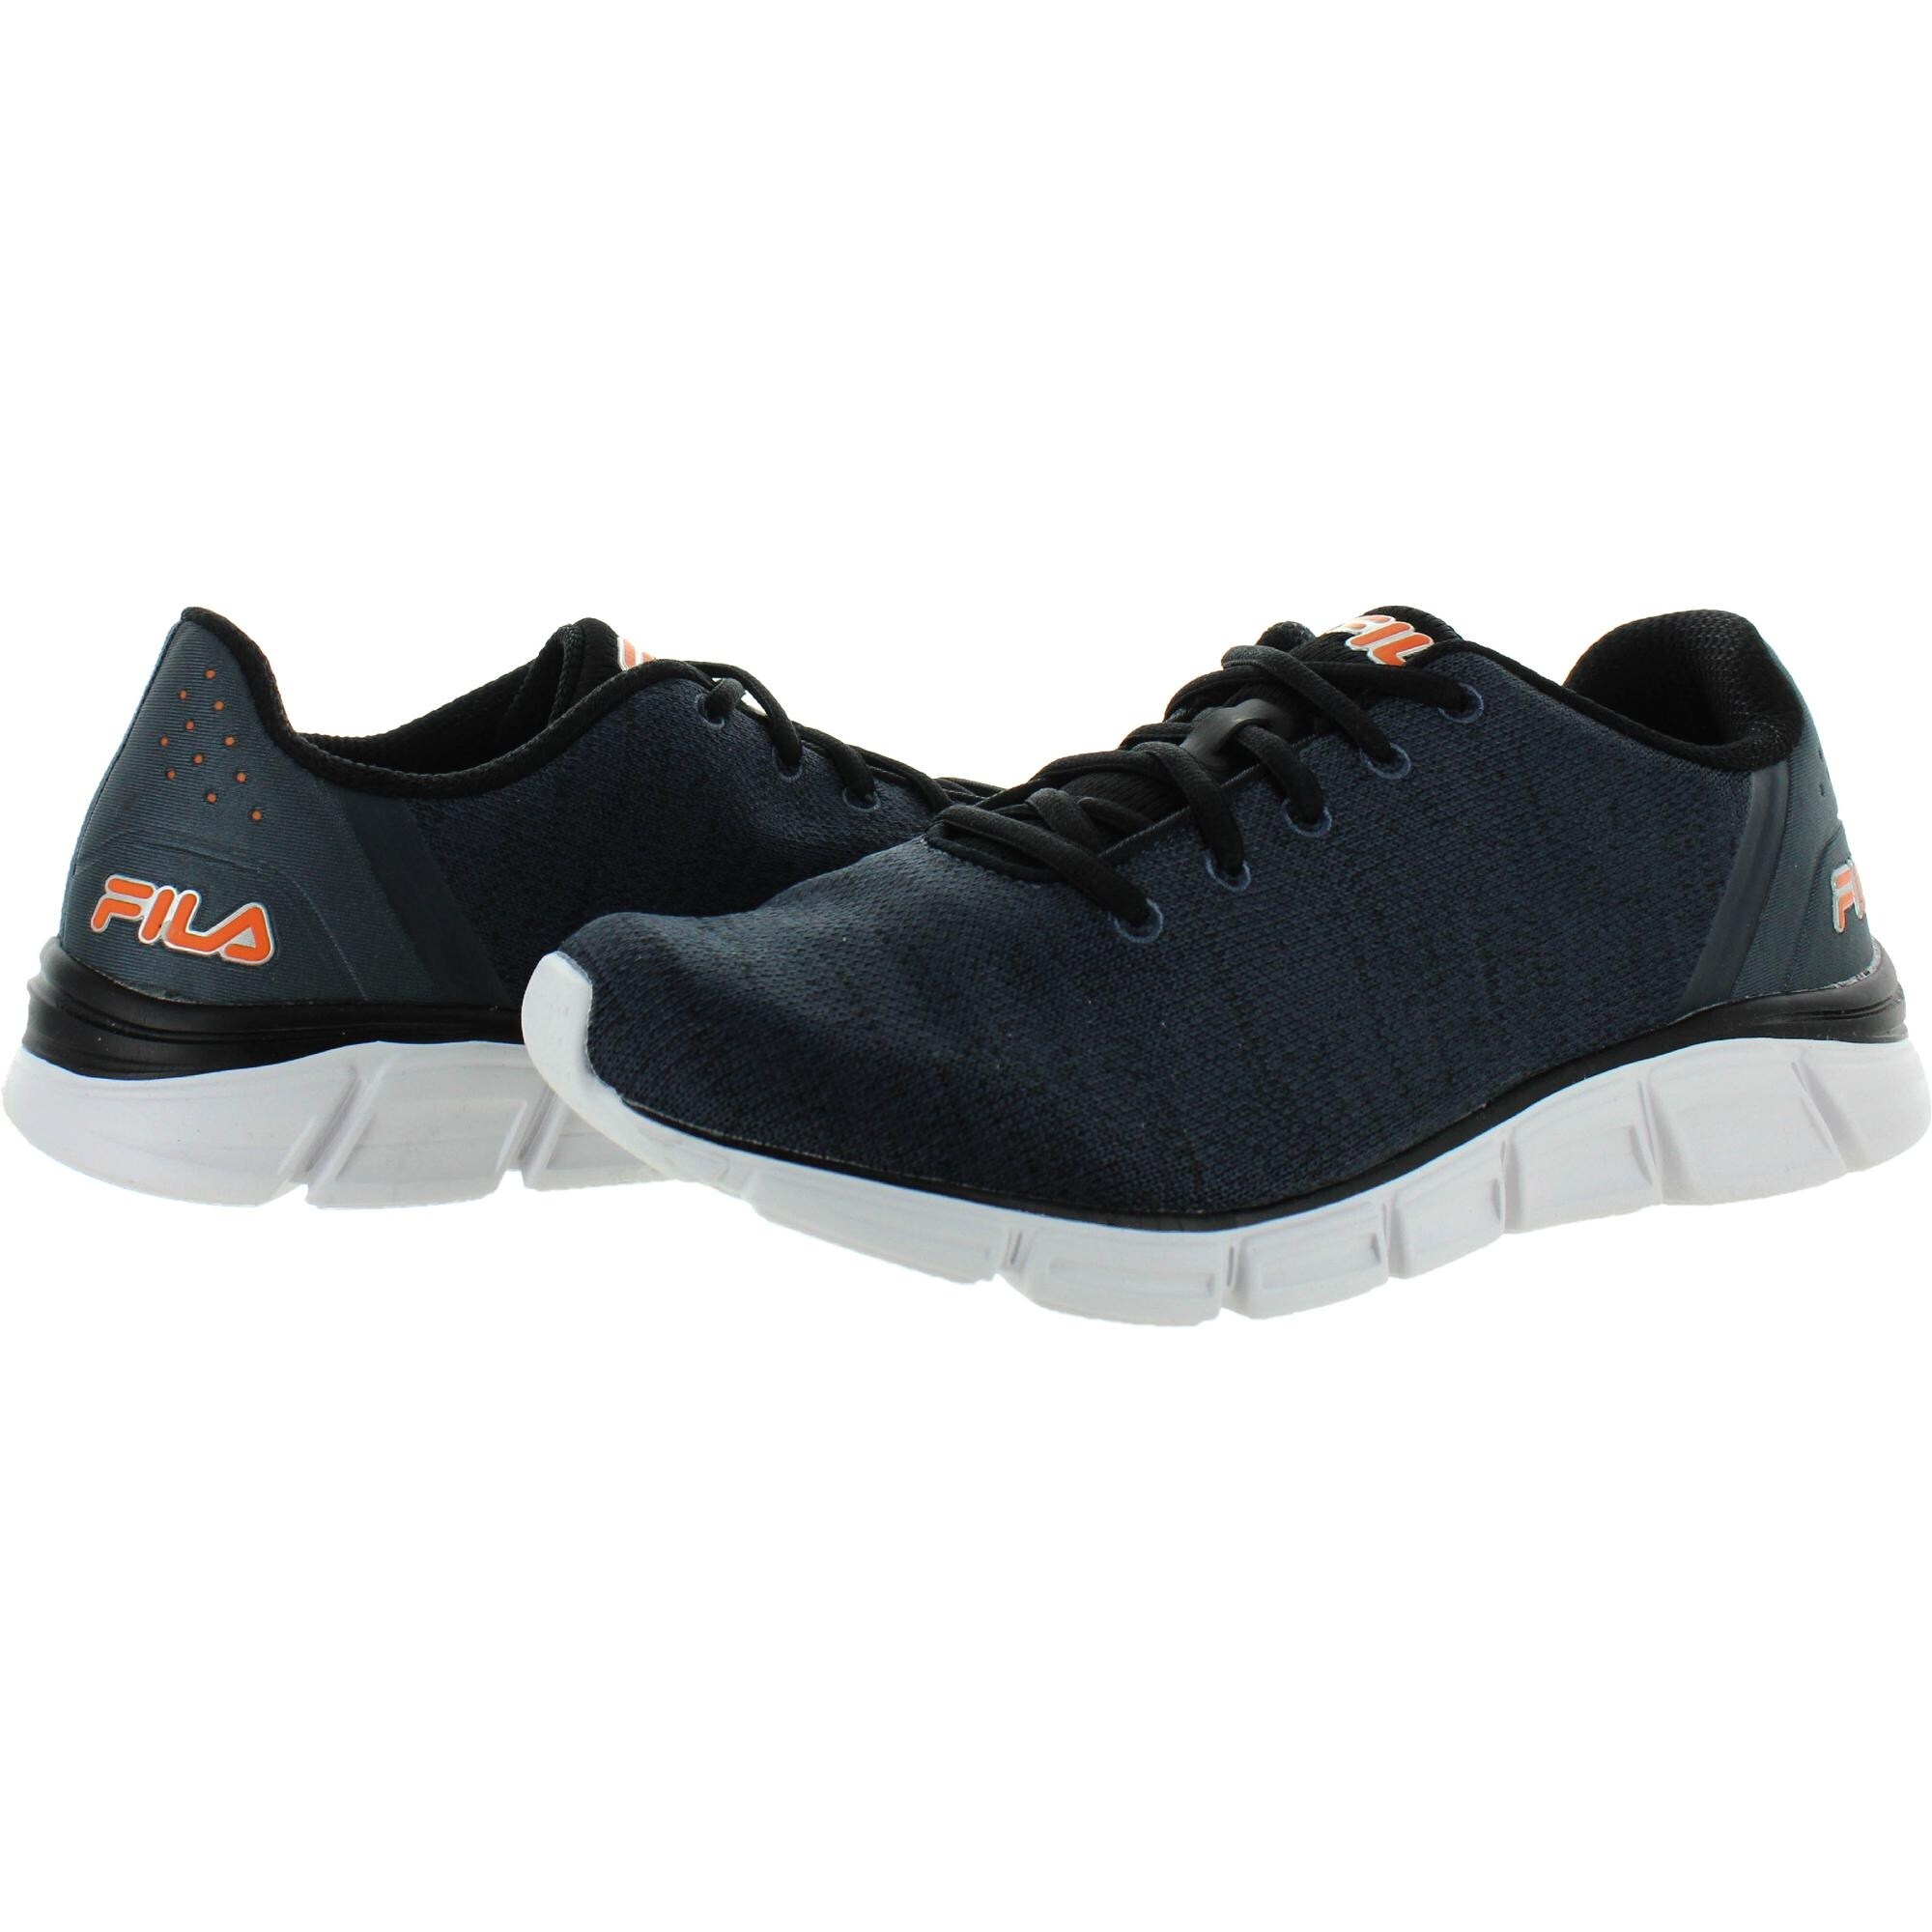 fila memory foam coolmax running shoes